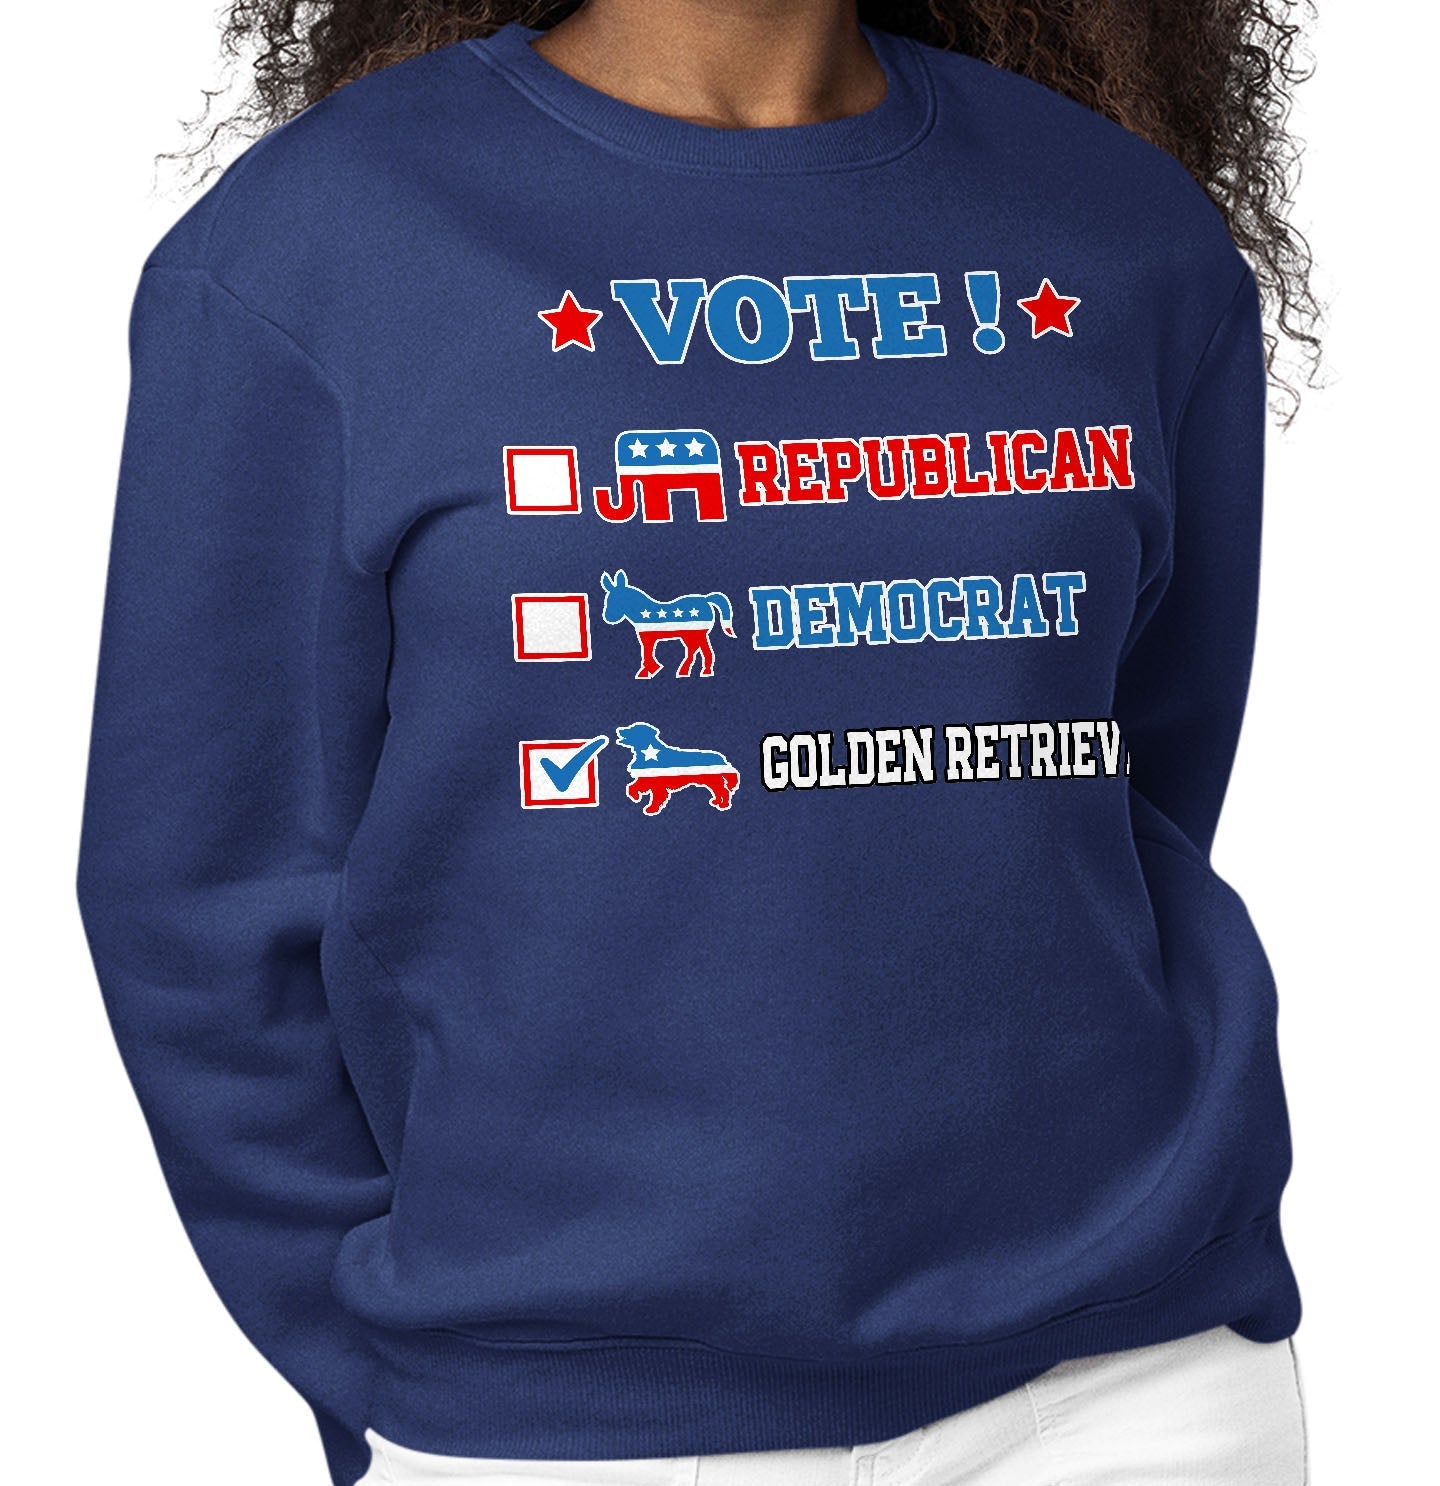 Vote for the Golden Retriever - Adult Unisex Crewneck Sweatshirt